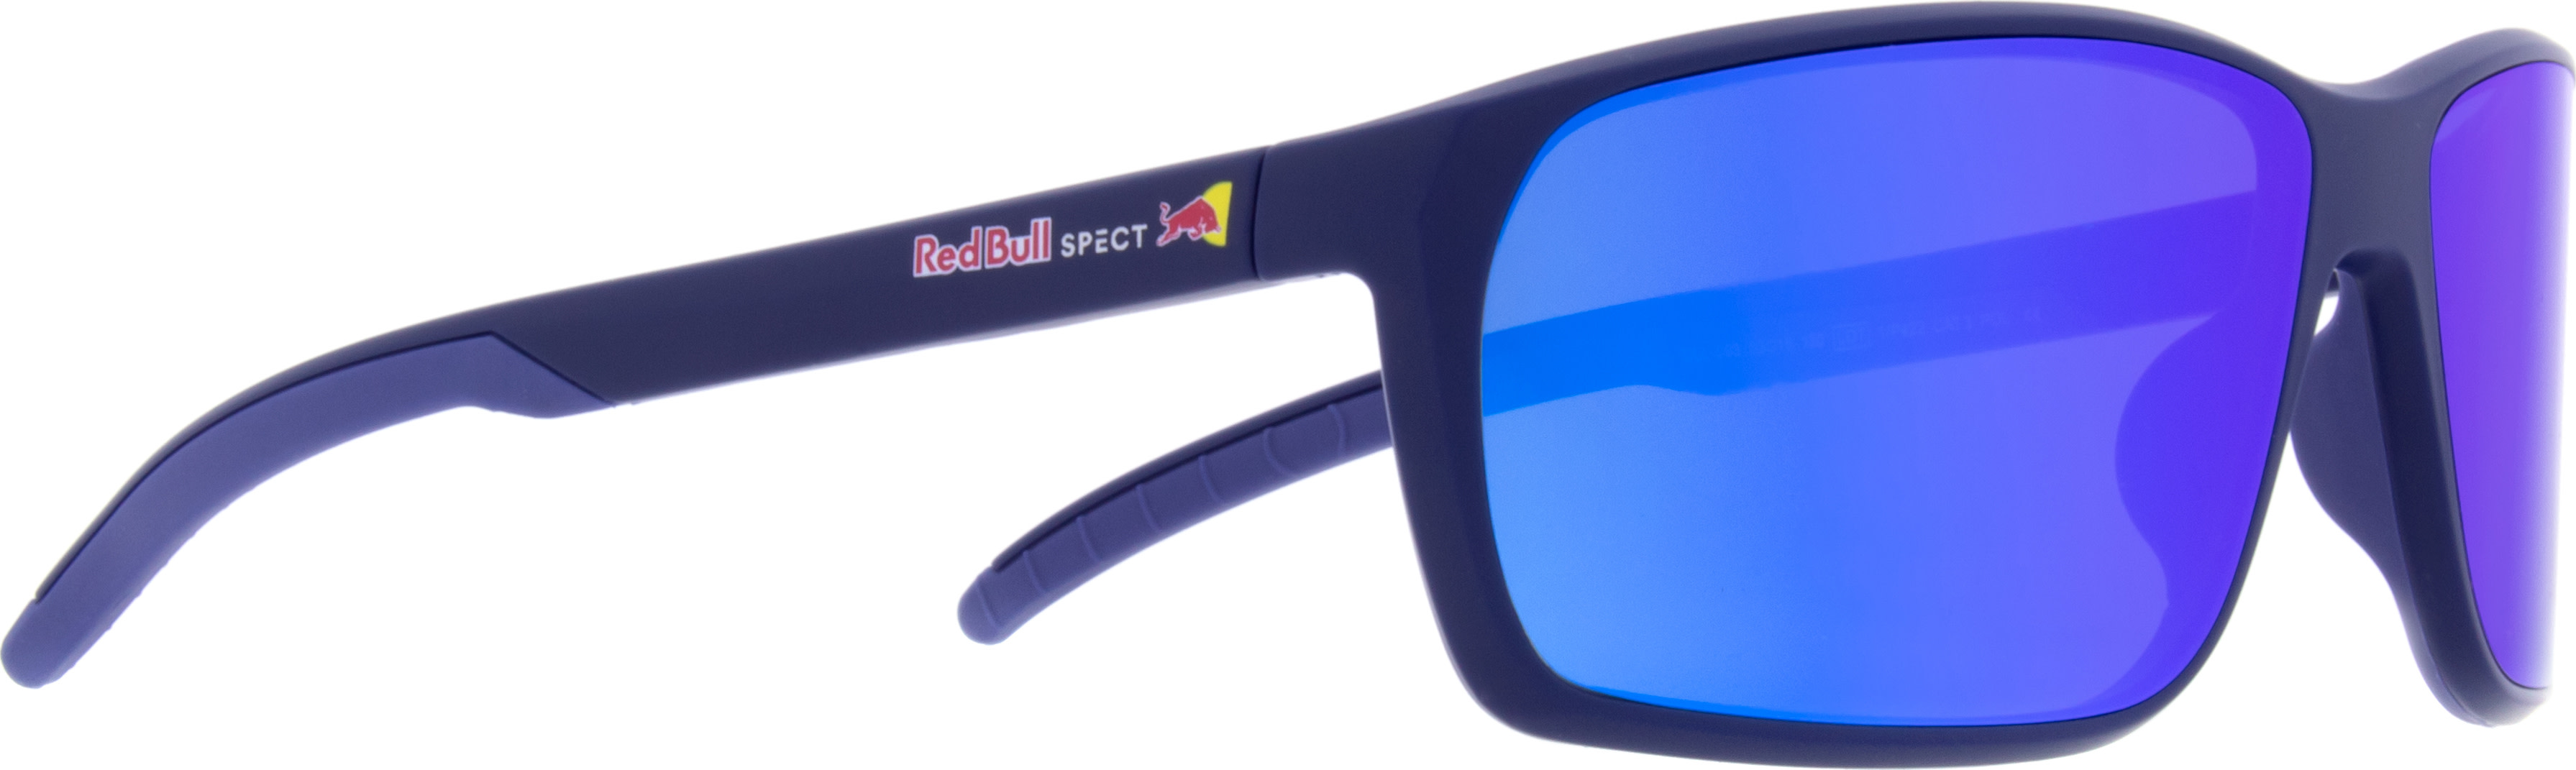 Red Bull SPECT Till Blue/Smoke Blue Mirror